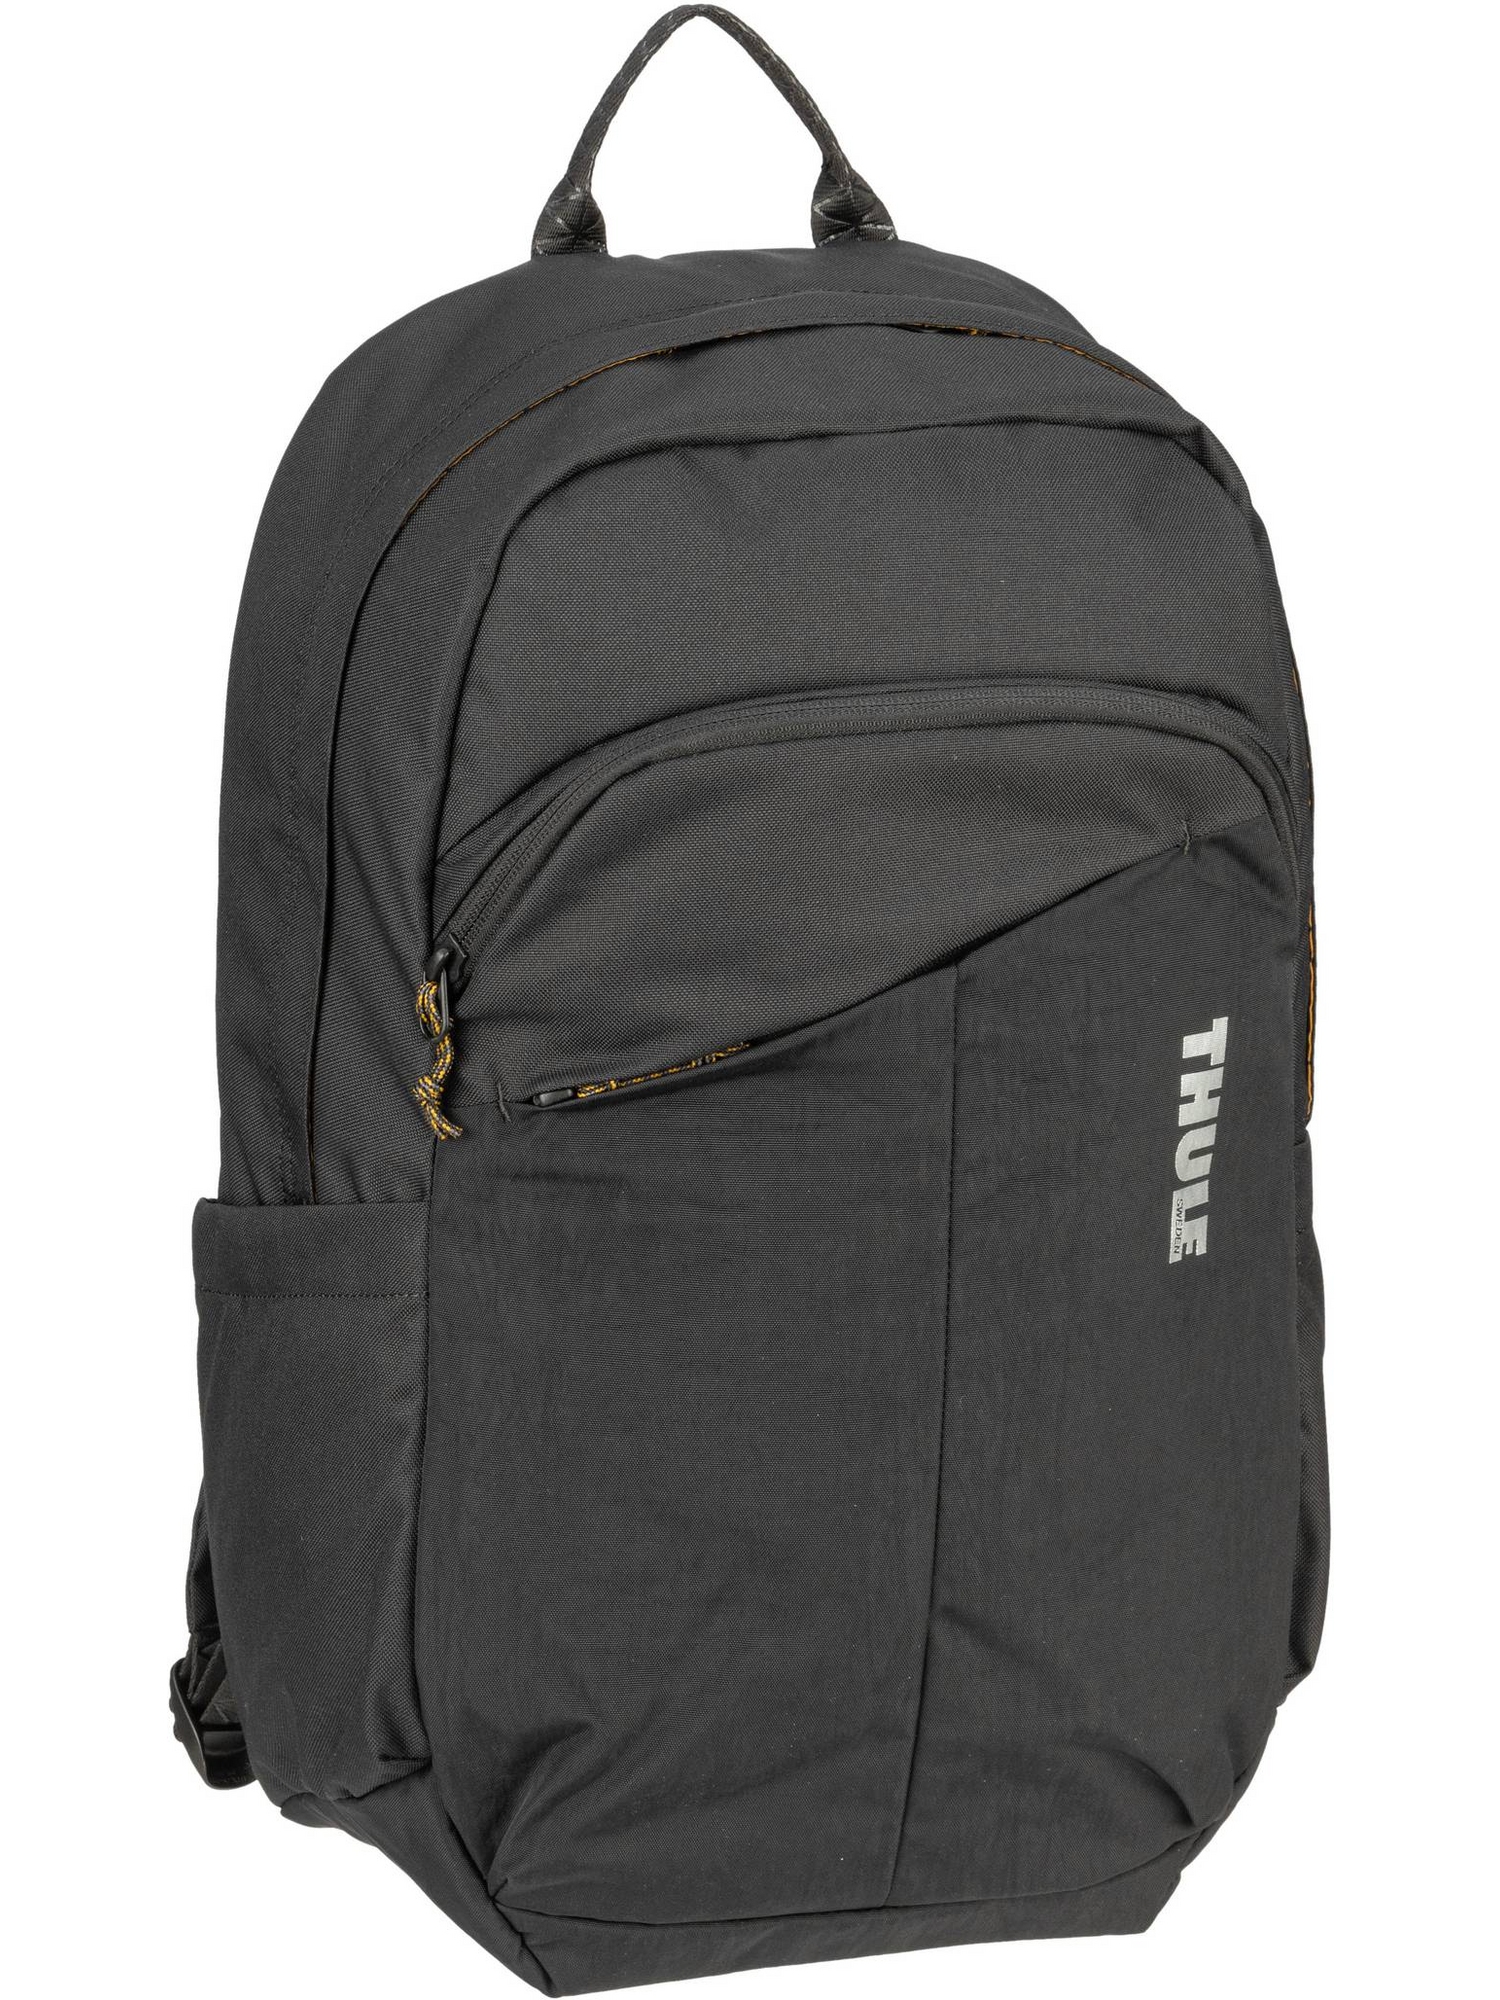 Рюкзак Thule/Backpack Indago Backpack 23L, черный рюкзак thule indago backpack 23l black